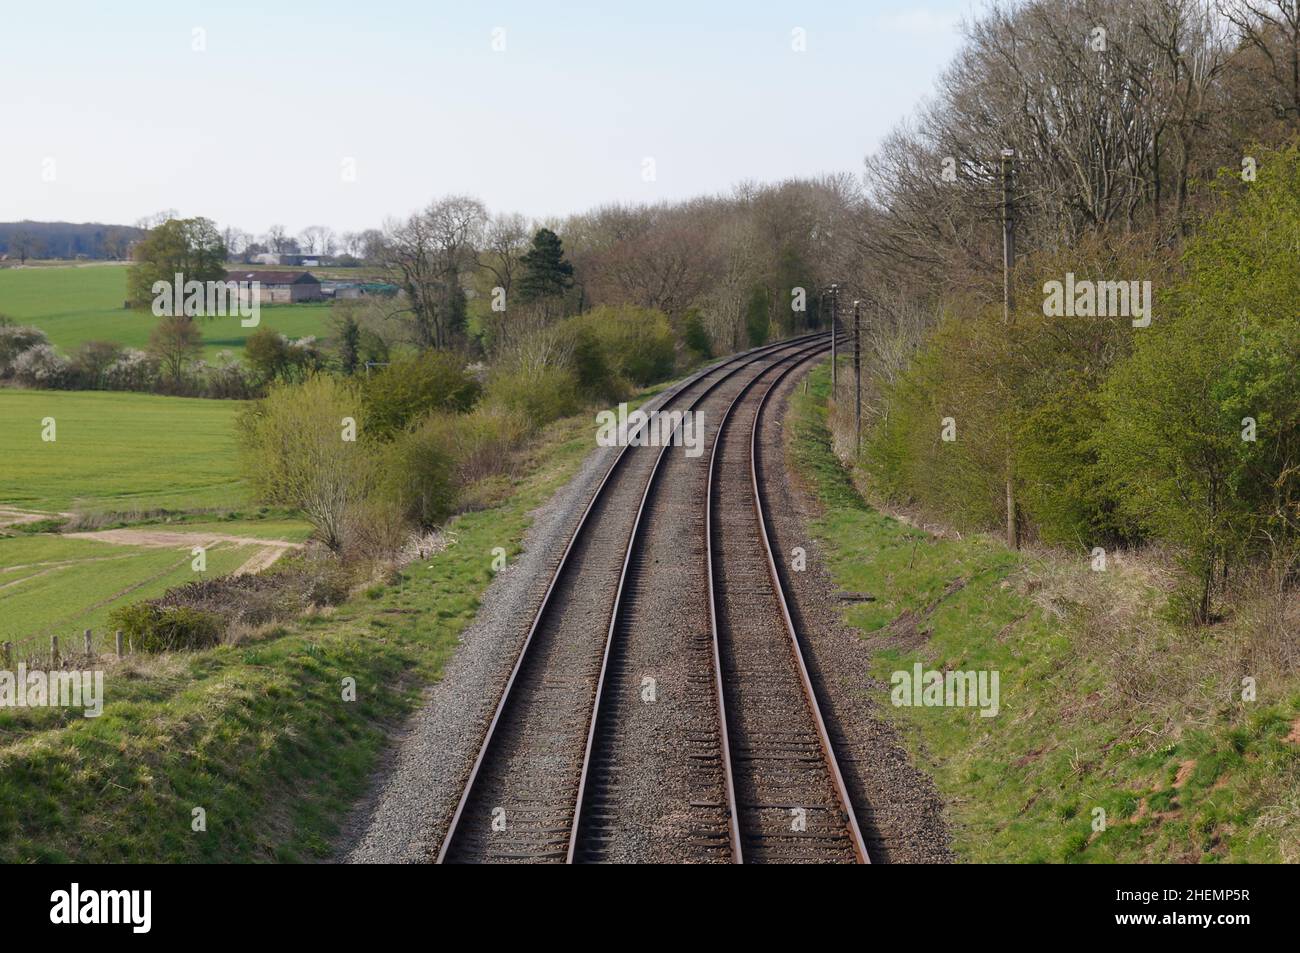 Train tracks running through the countryside, England Stock Photo